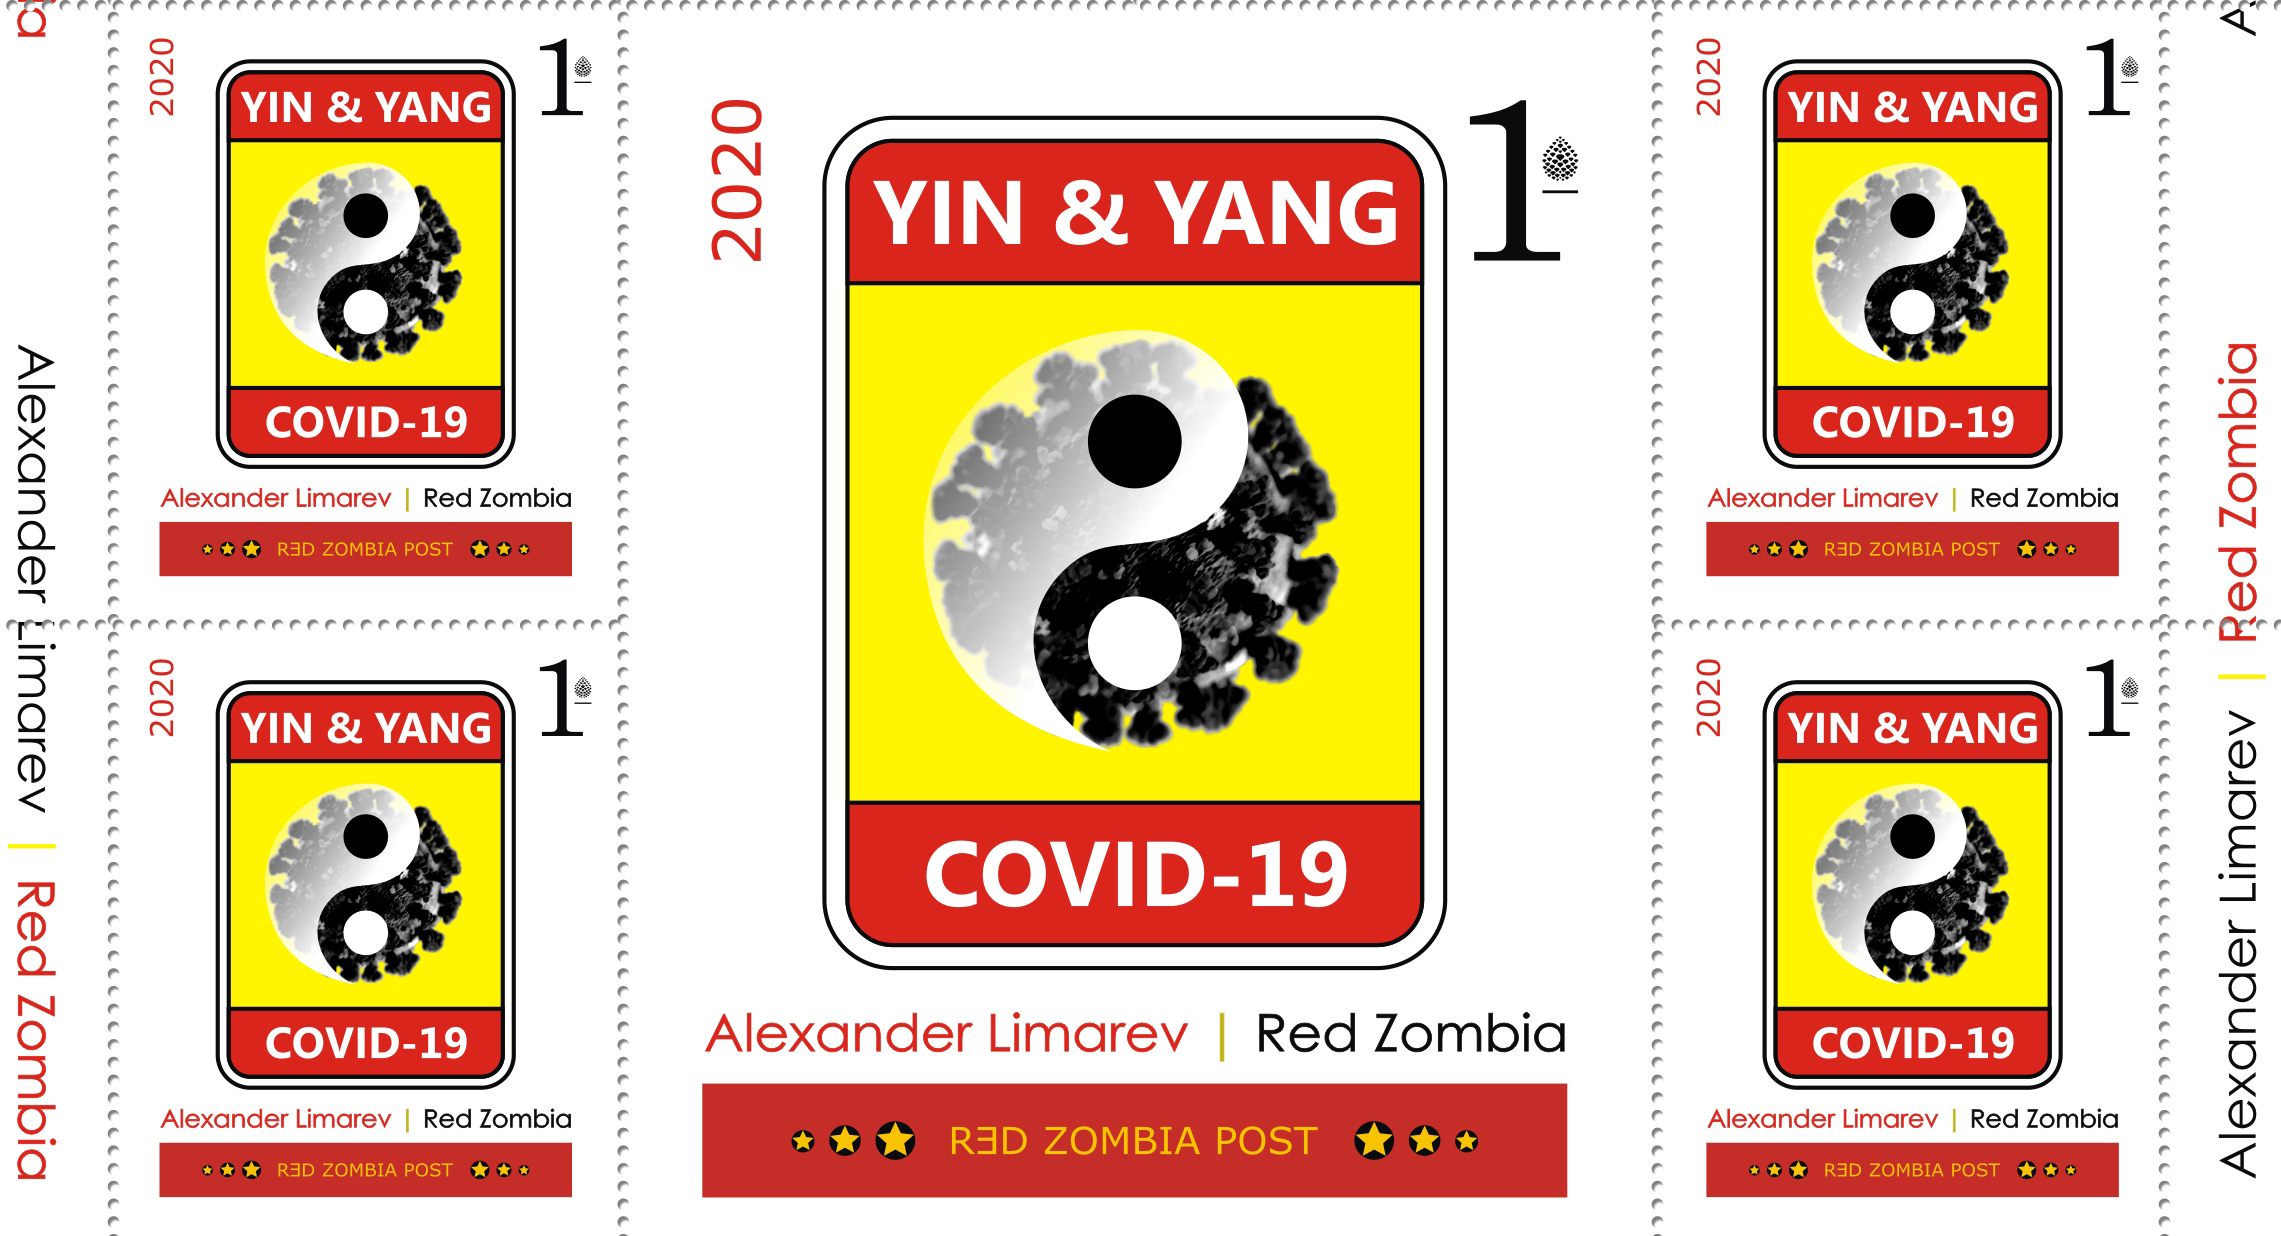 Yin & Yang COVID-19 by Alexander Limarev - Siberia 2020